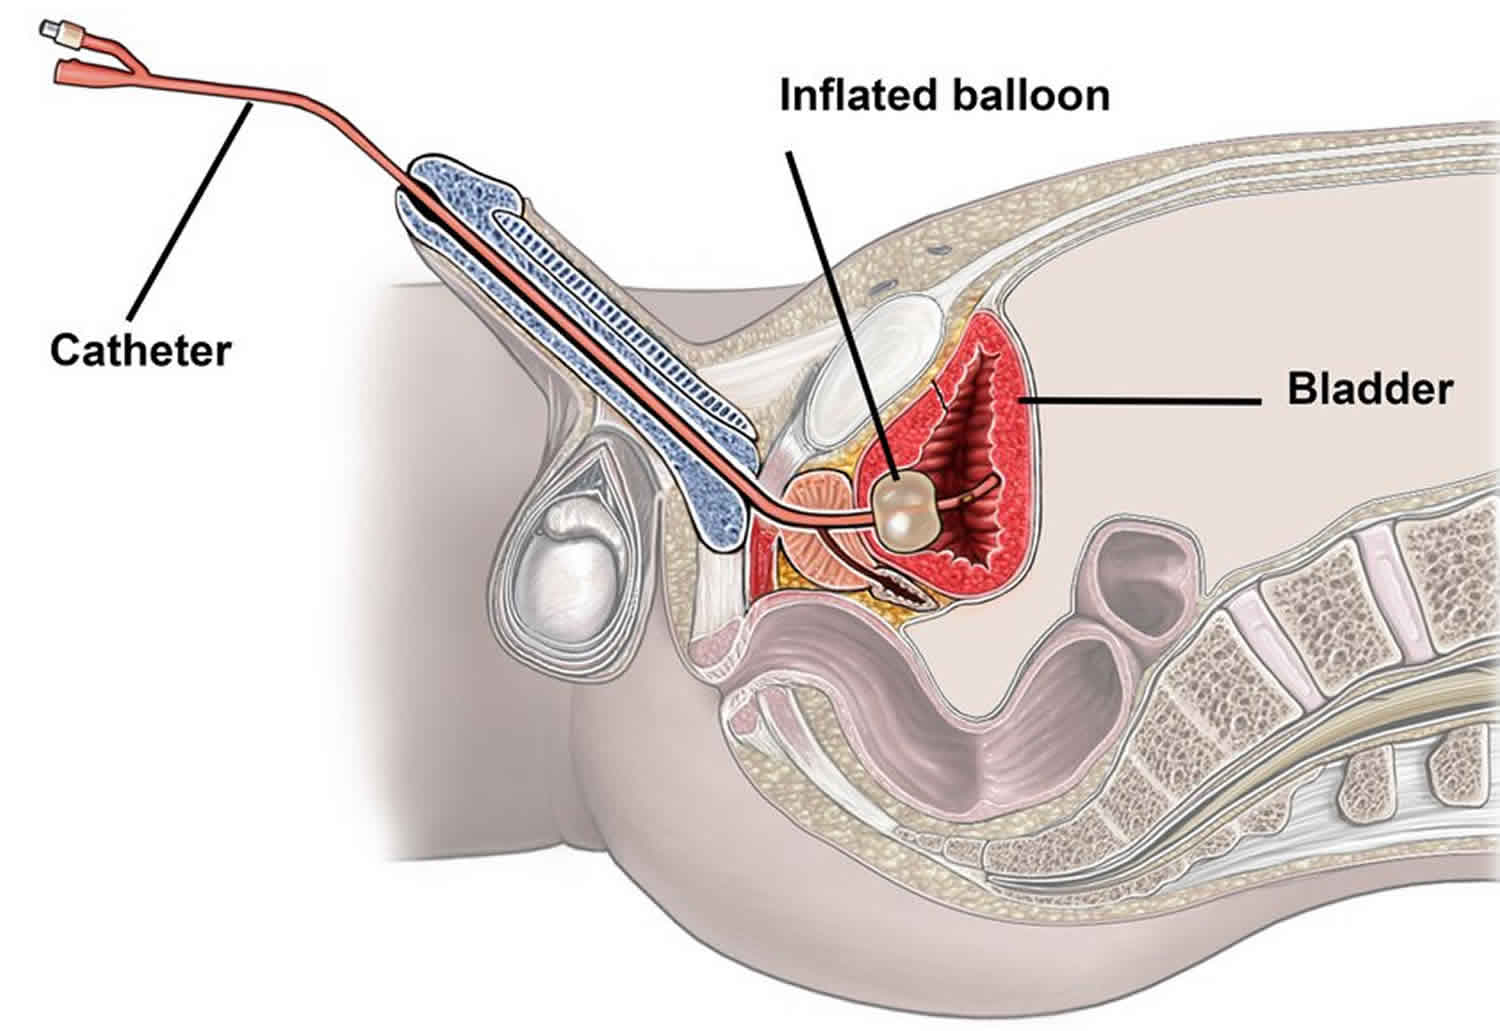 indwelling urinary catheter